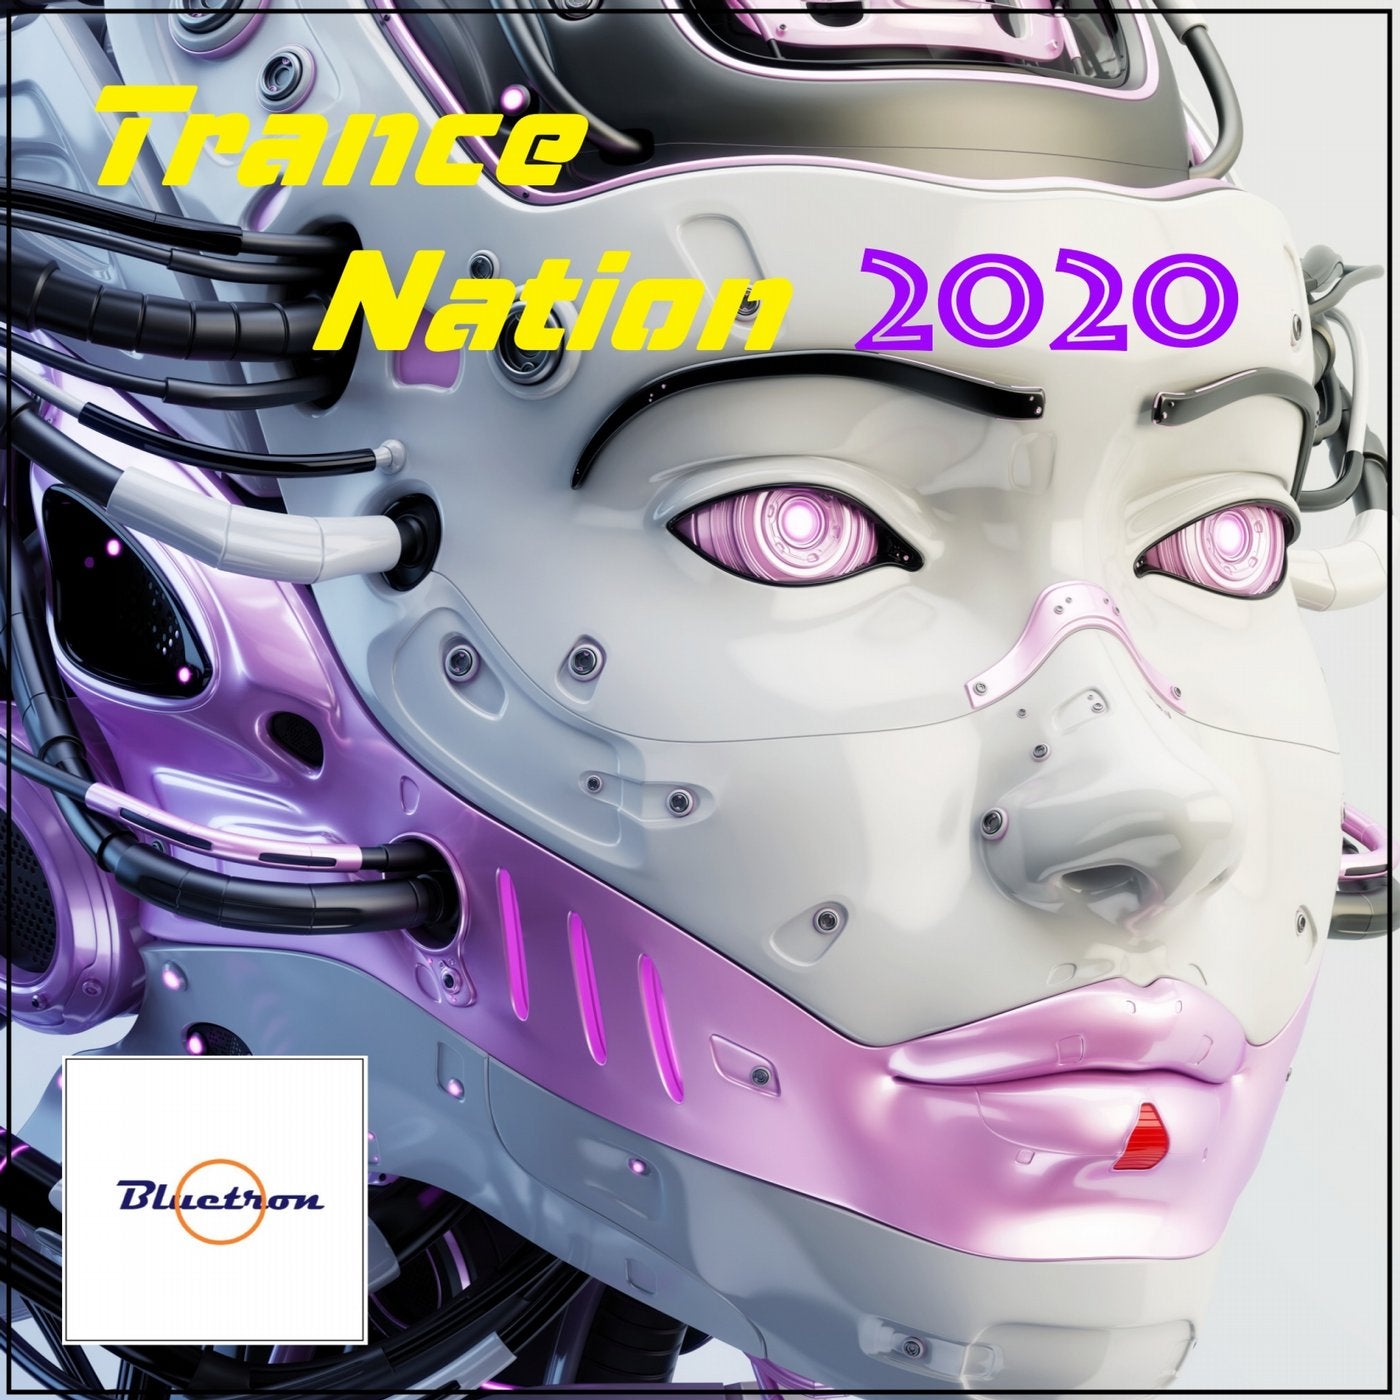 Trance Nation 2020